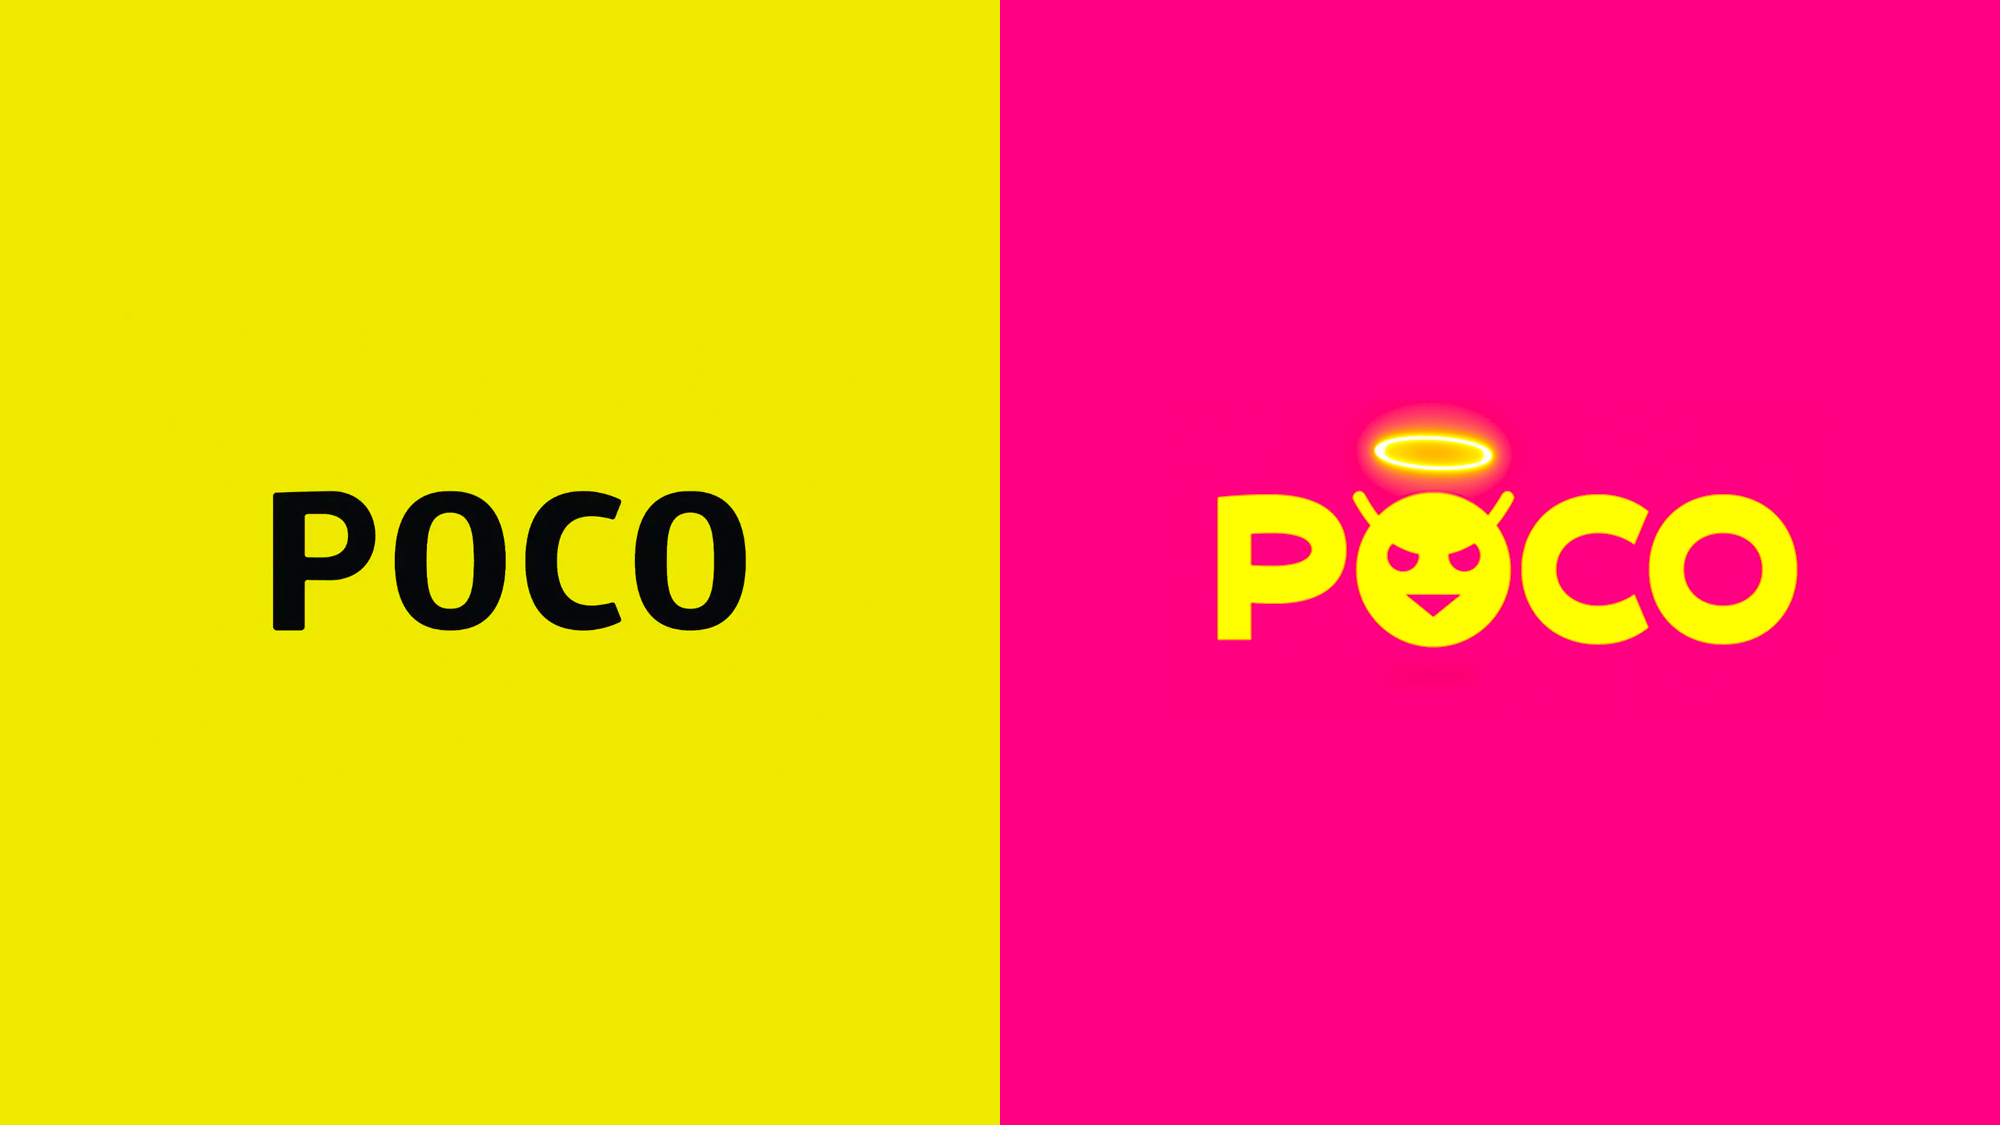 Where is the origin of Poco (phone brand)? - Quora